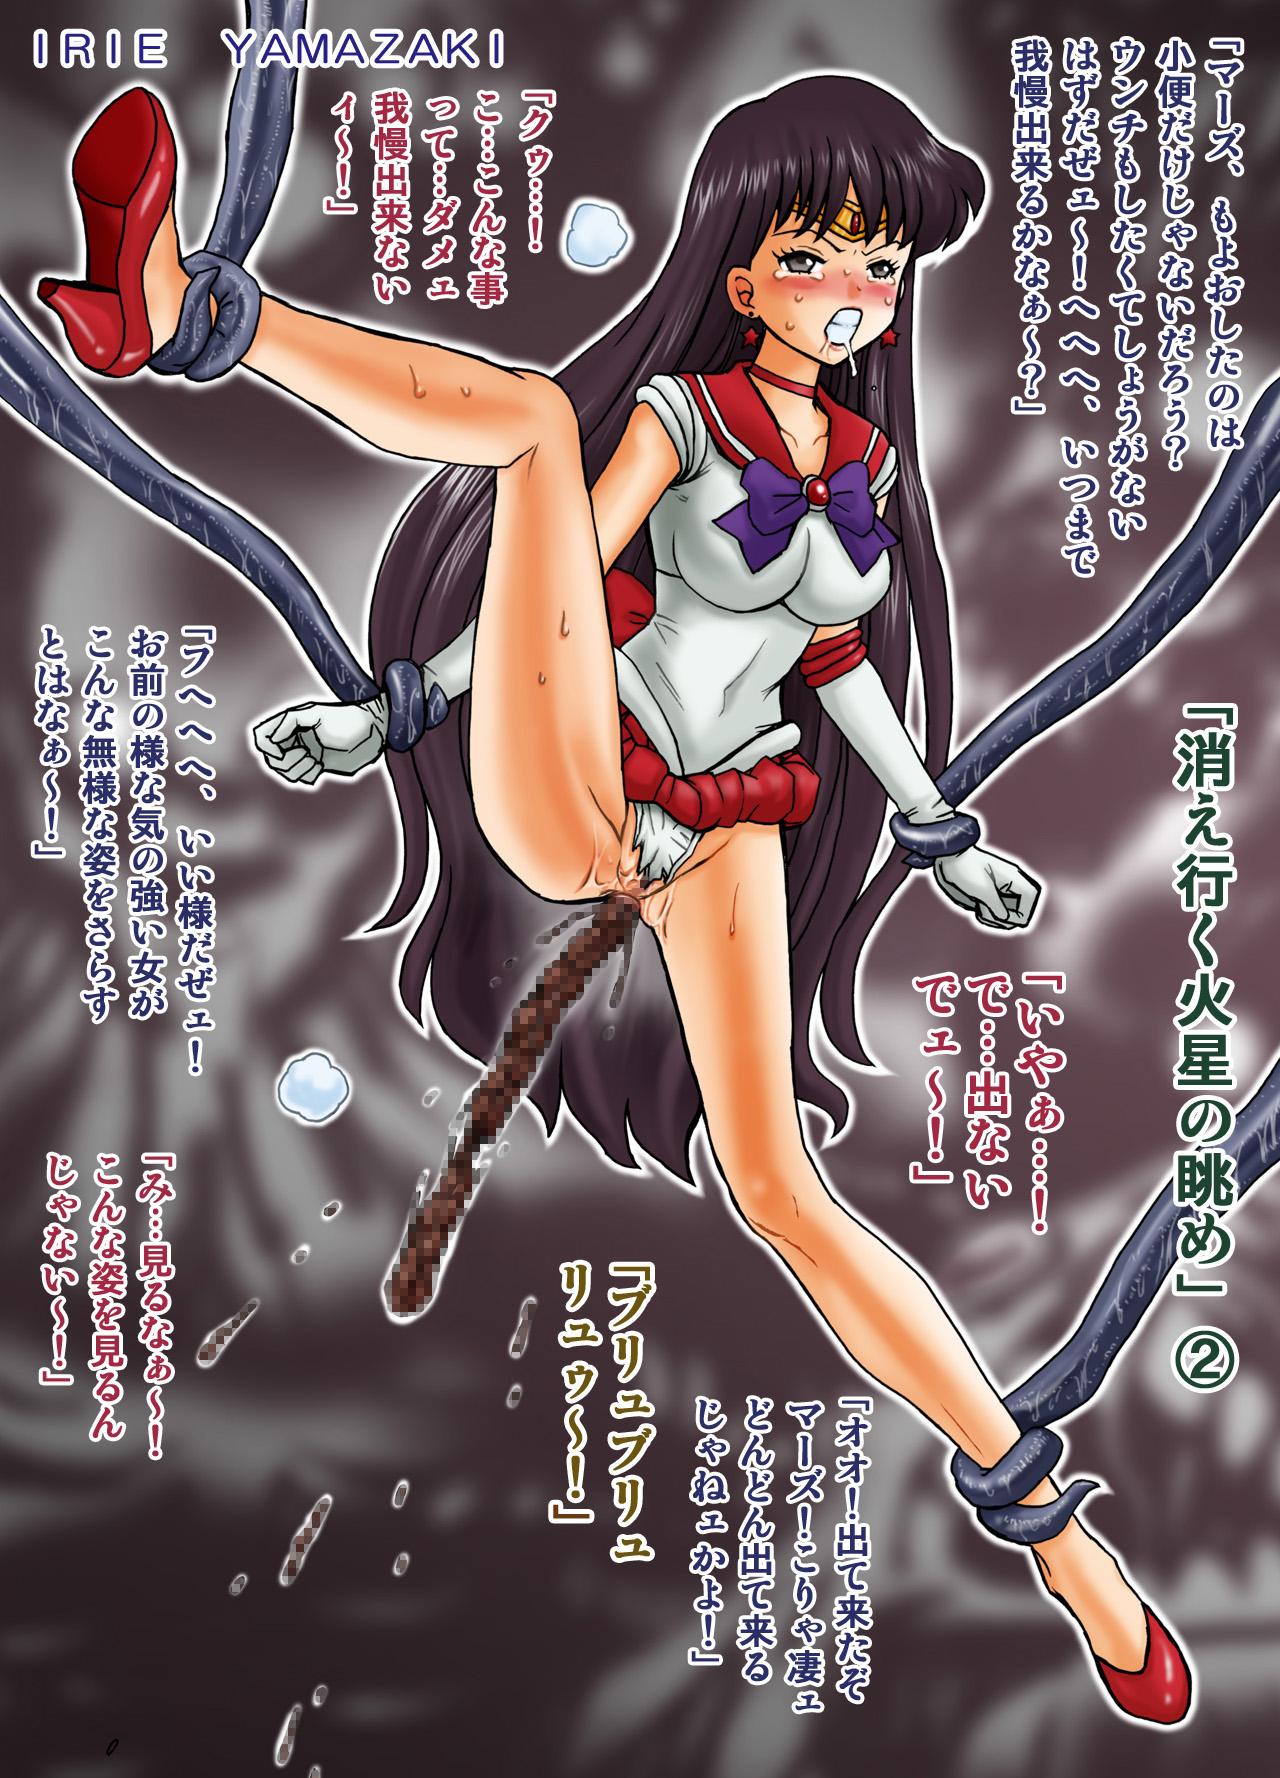 IRIE YAMAZAKI "Sailor Moon" Anal & Scatolo Sakuhinshuu Ver. 1 75